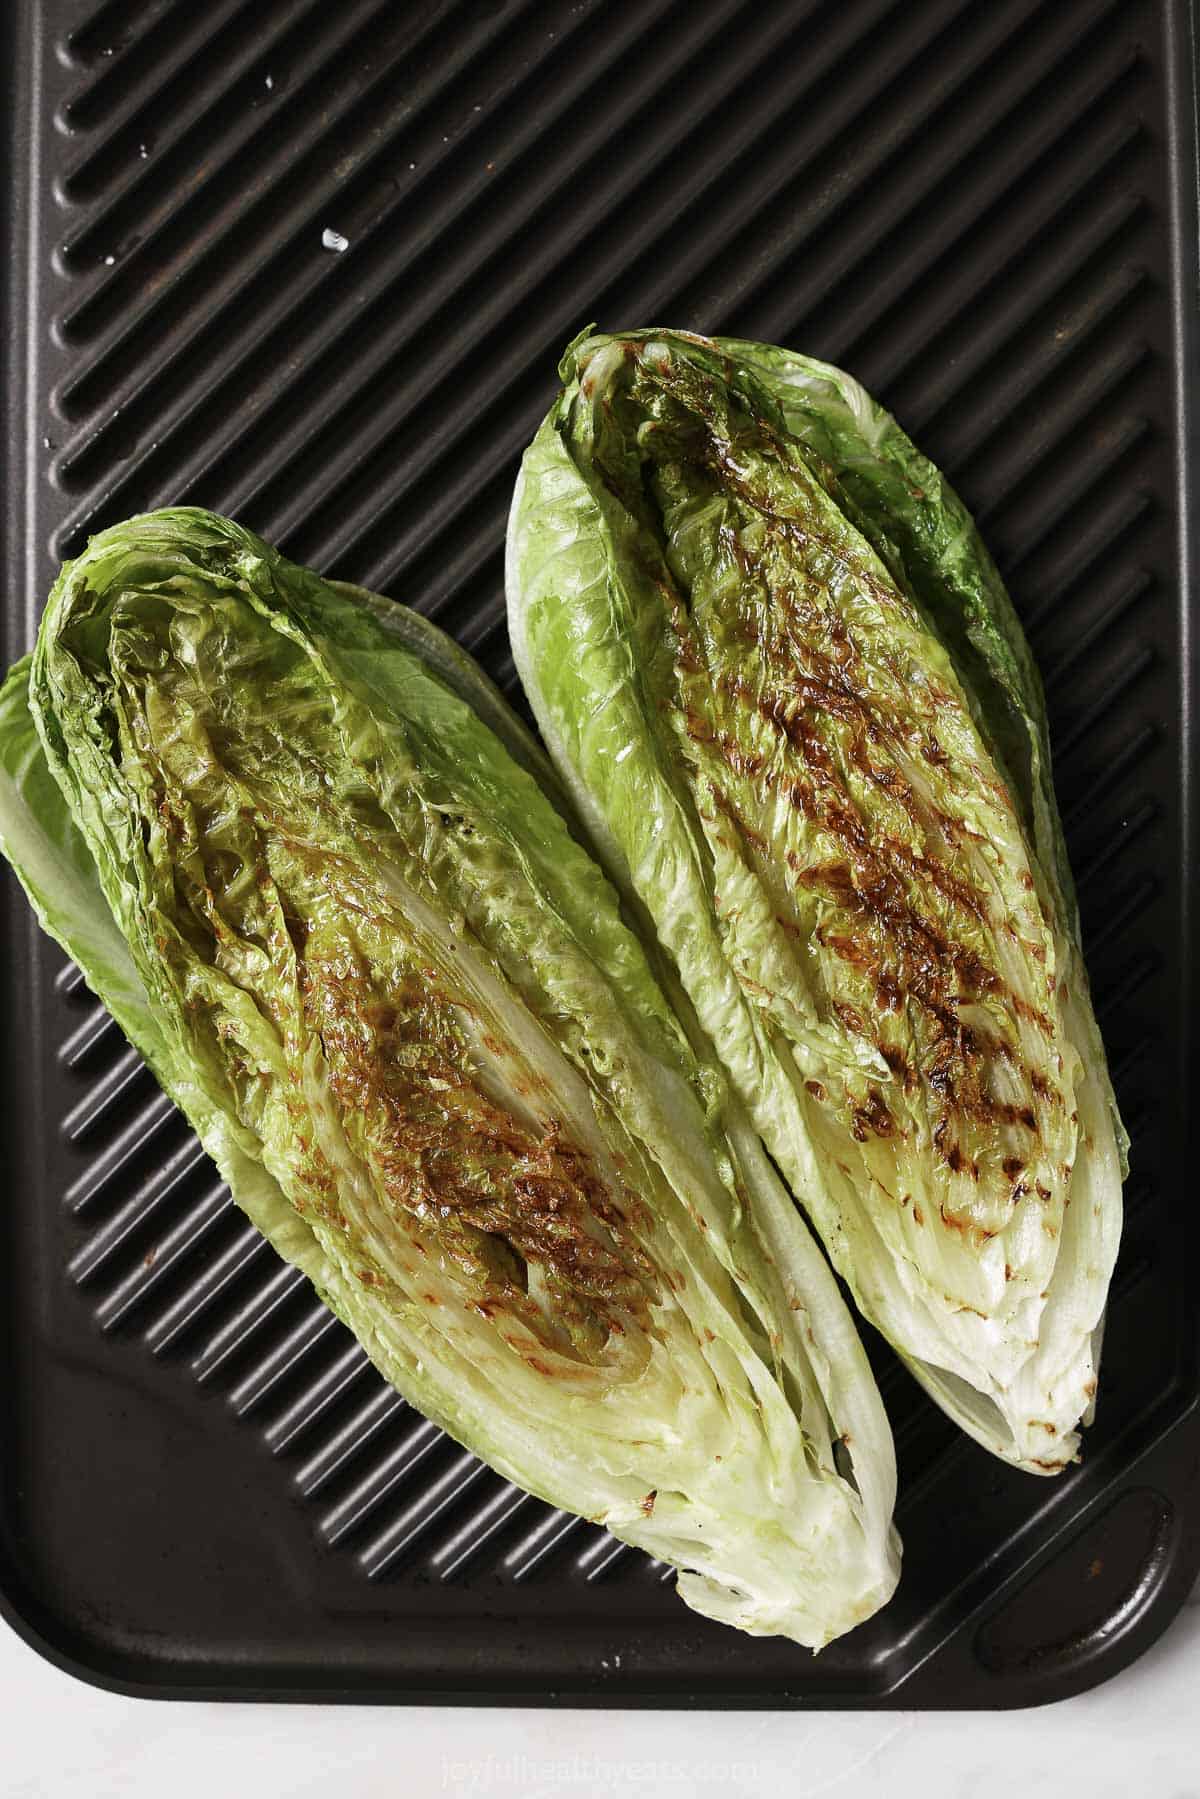 Grilled romaine lettuce.